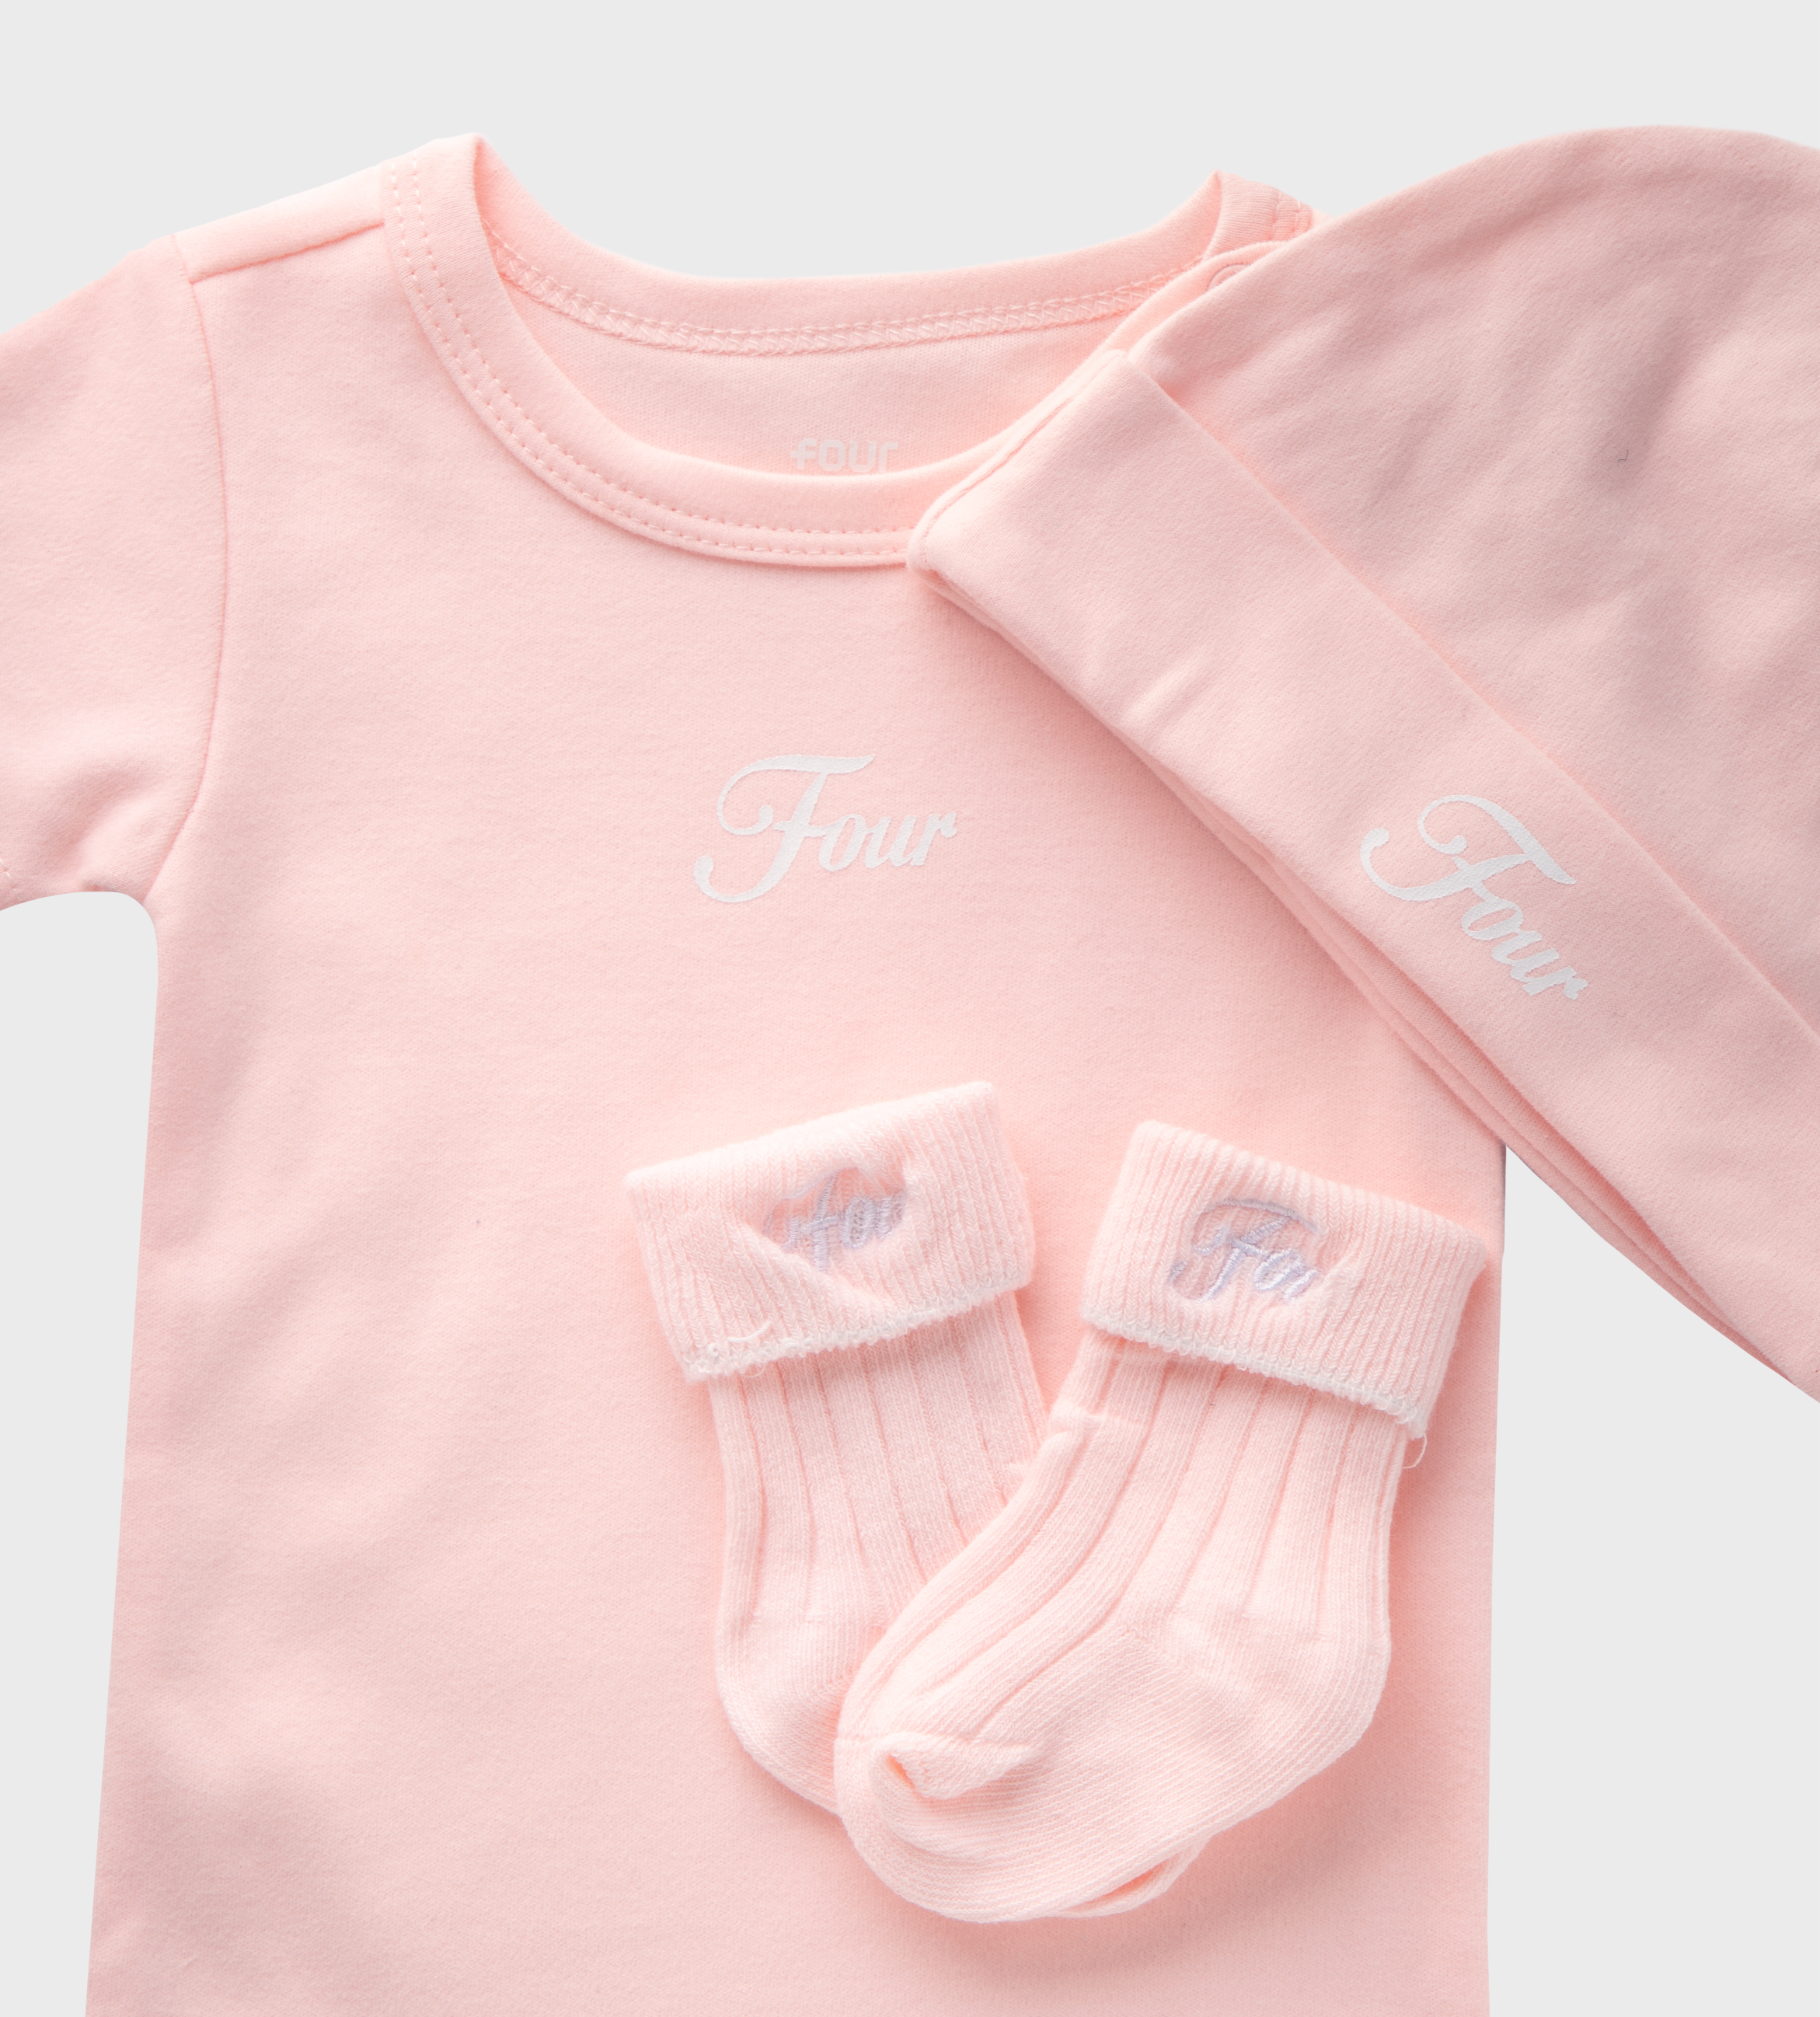 Baby Essentials Set (baby suit, hat & socks) Pink